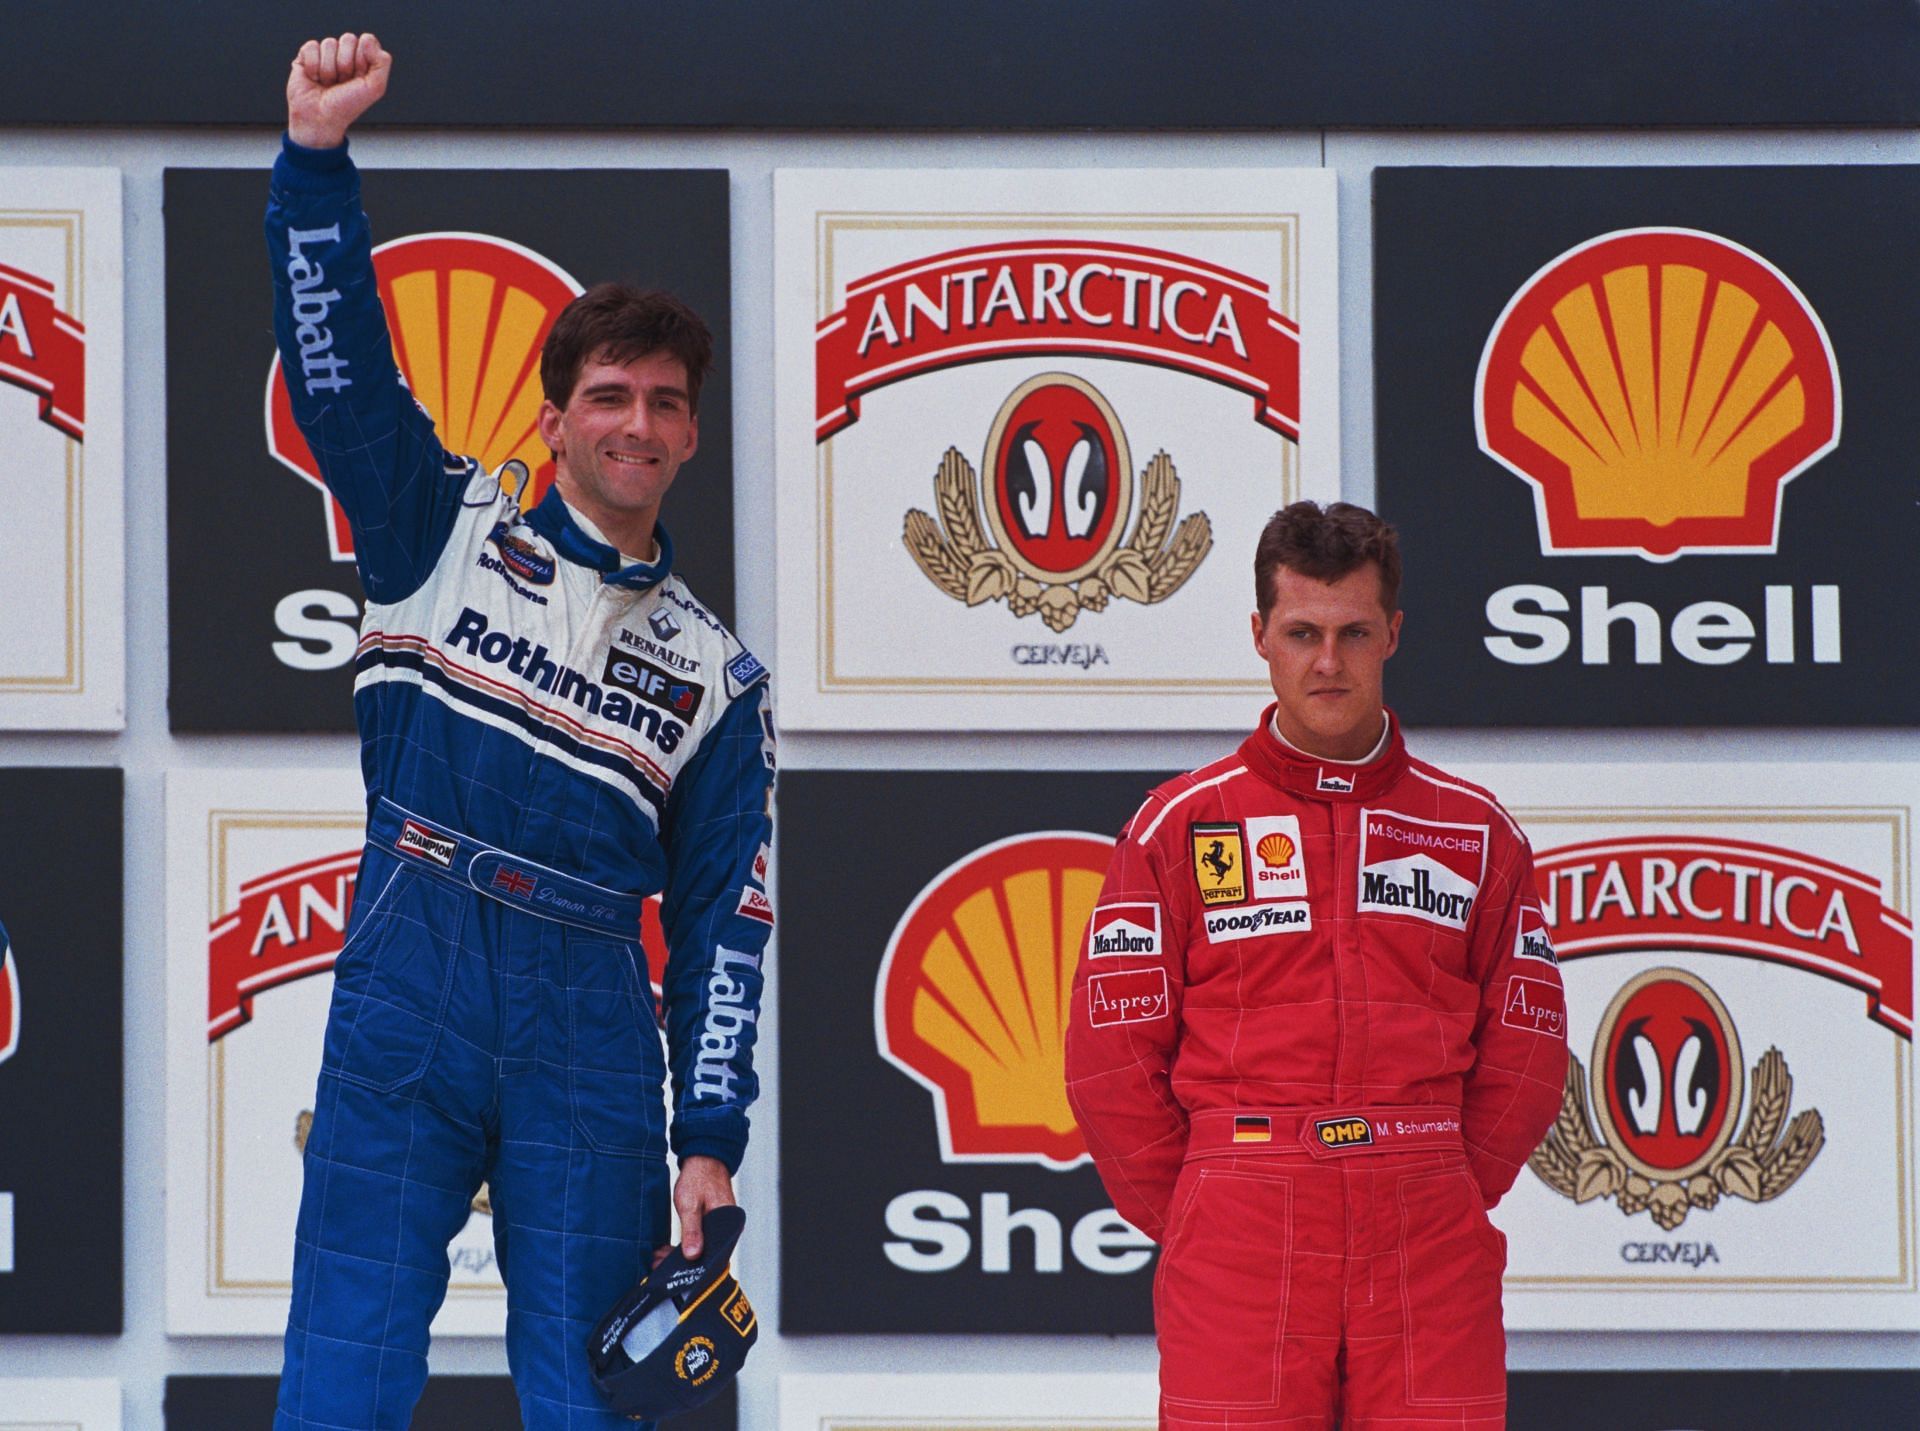 Grand Prix of Brazil - Damon Hill and Michael Schumacher share a podium